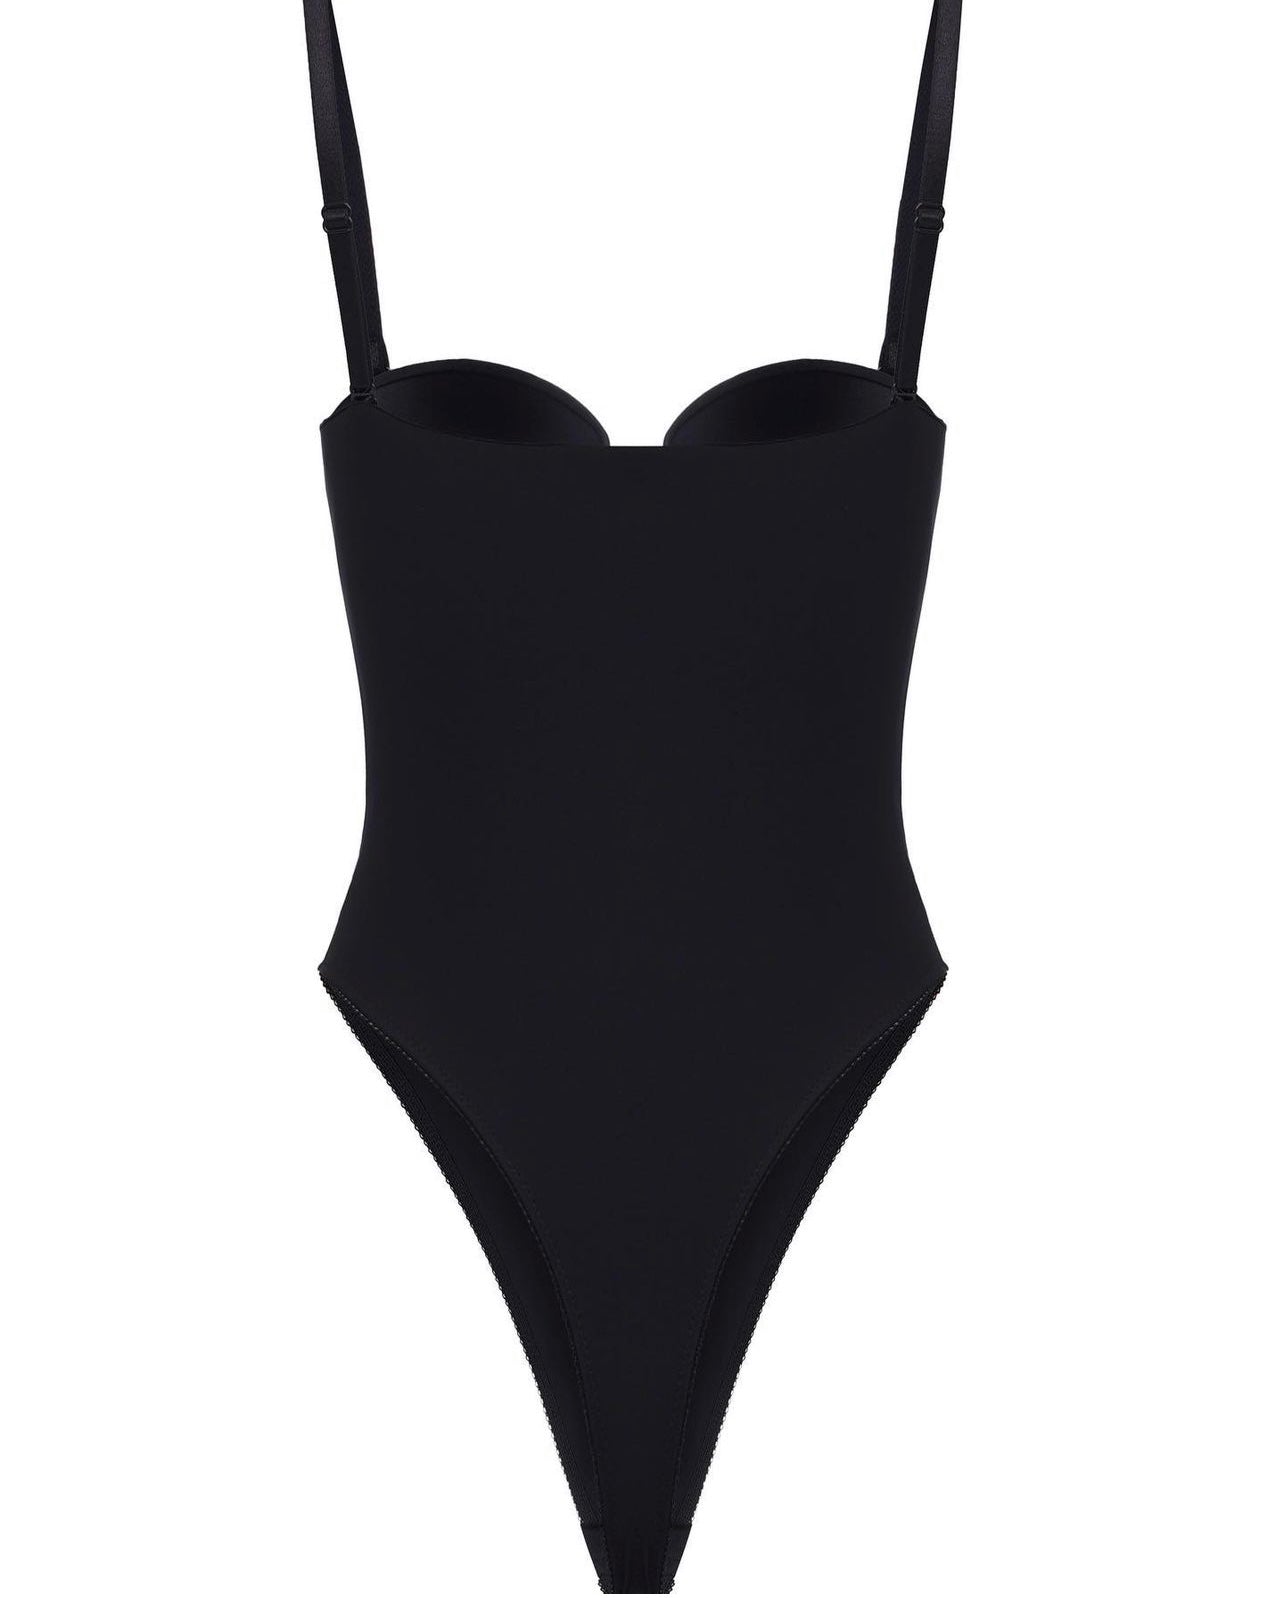 Victoria forming black string bodysuit